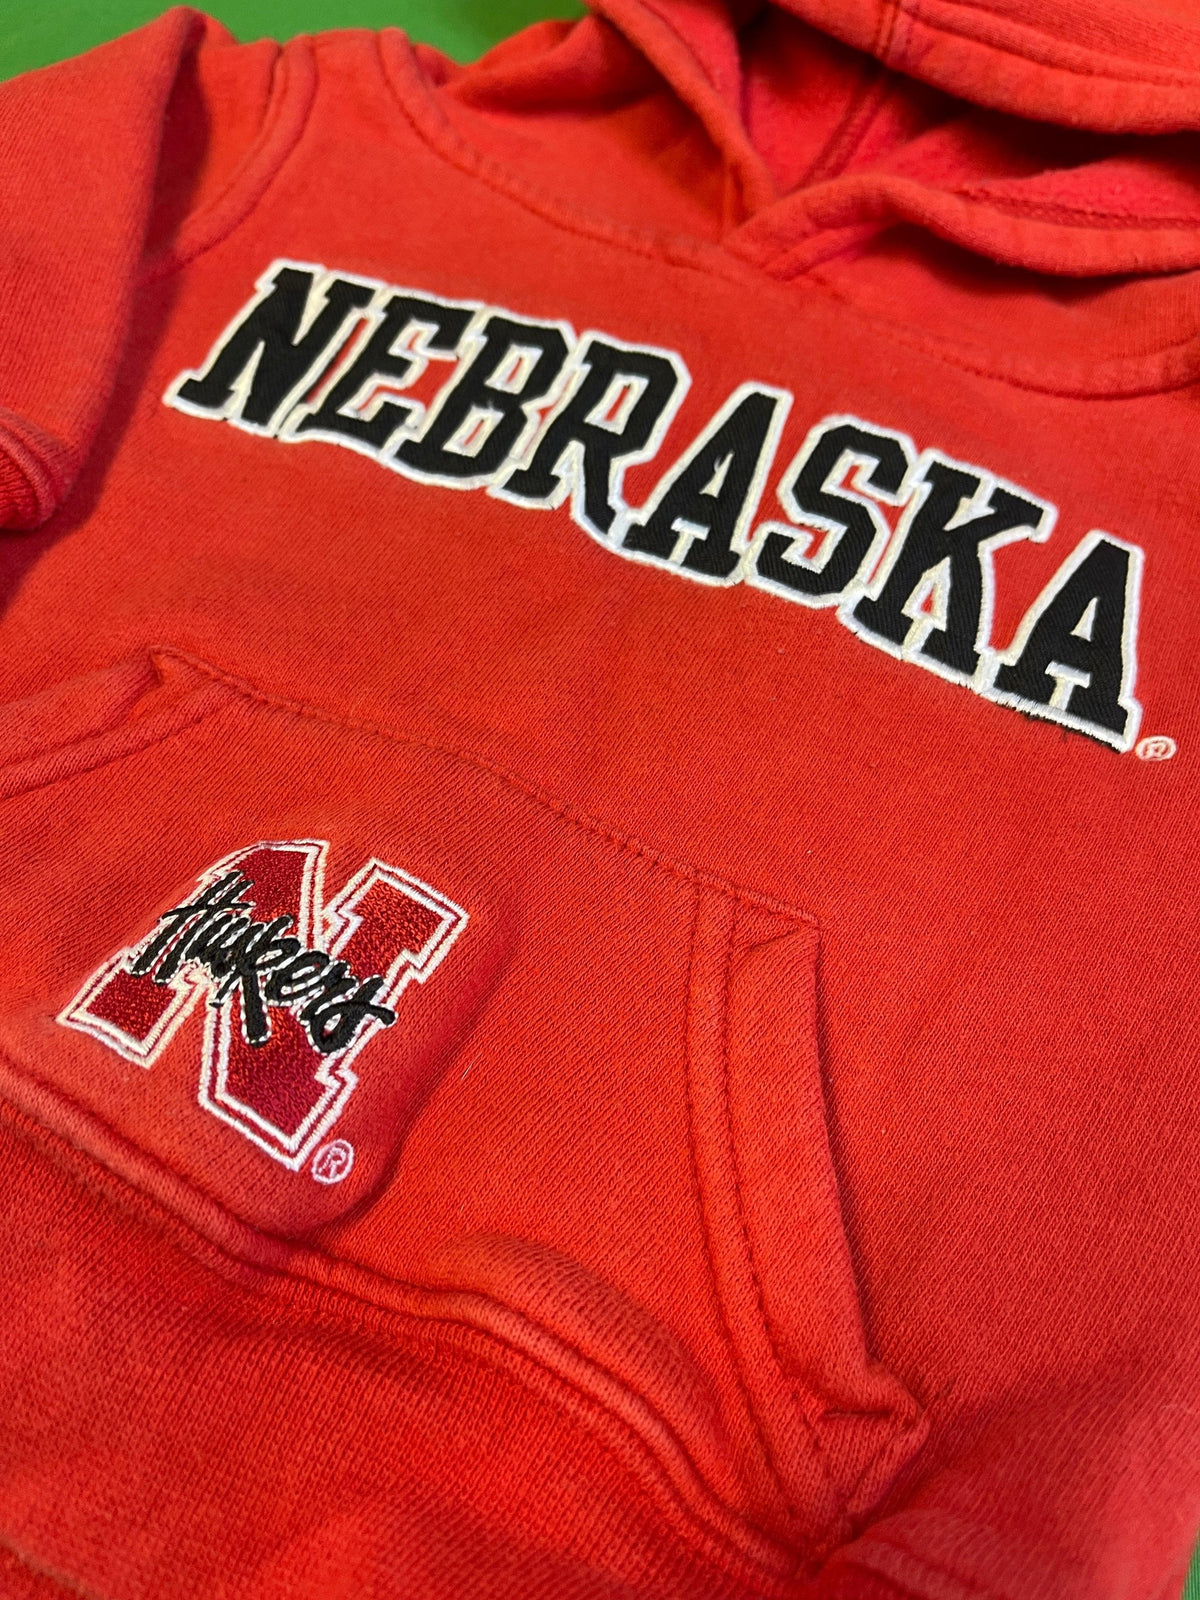 NCAA Nebraska Cornhuskers Pullover Hoodie Toddler 12 Months